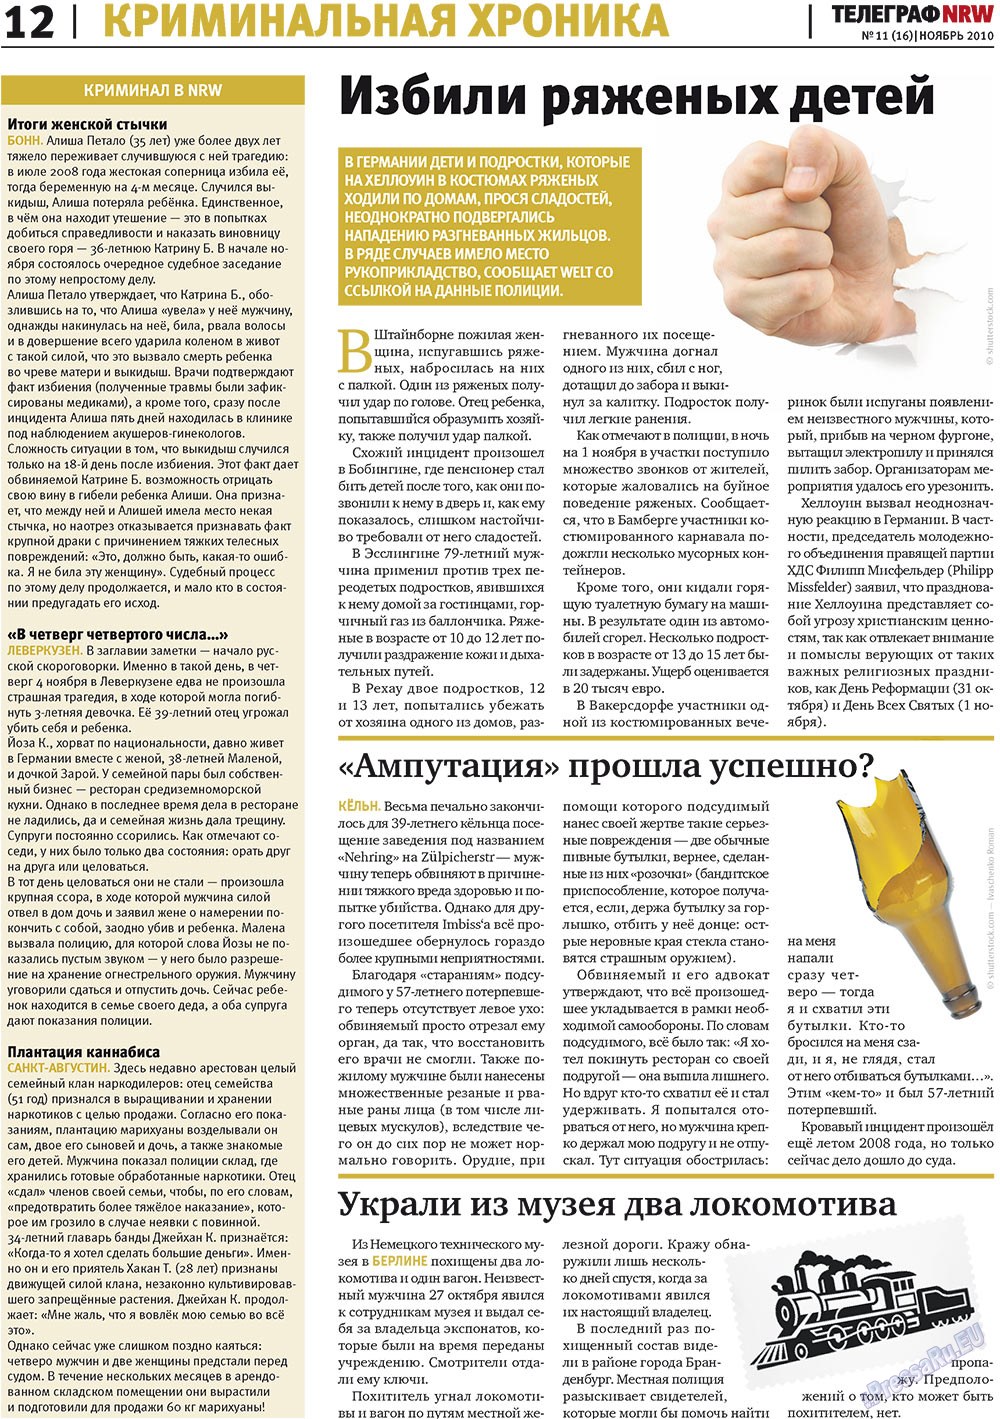 Телеграф NRW, газета. 2010 №11 стр.12